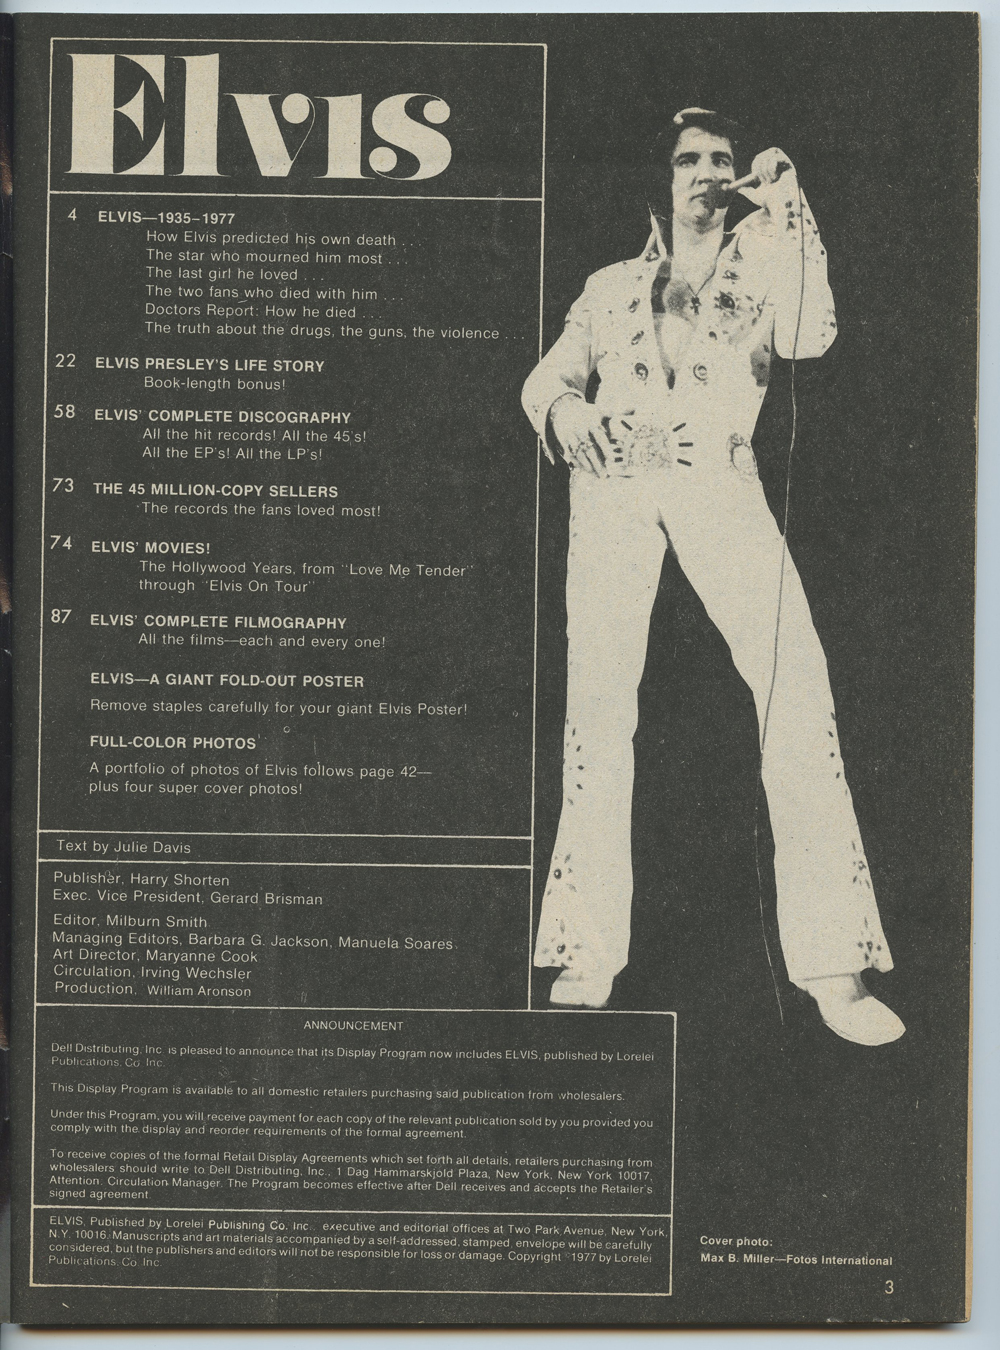 Elvis Presley Magazine back issue 1977 Elvis Presley Memories forever